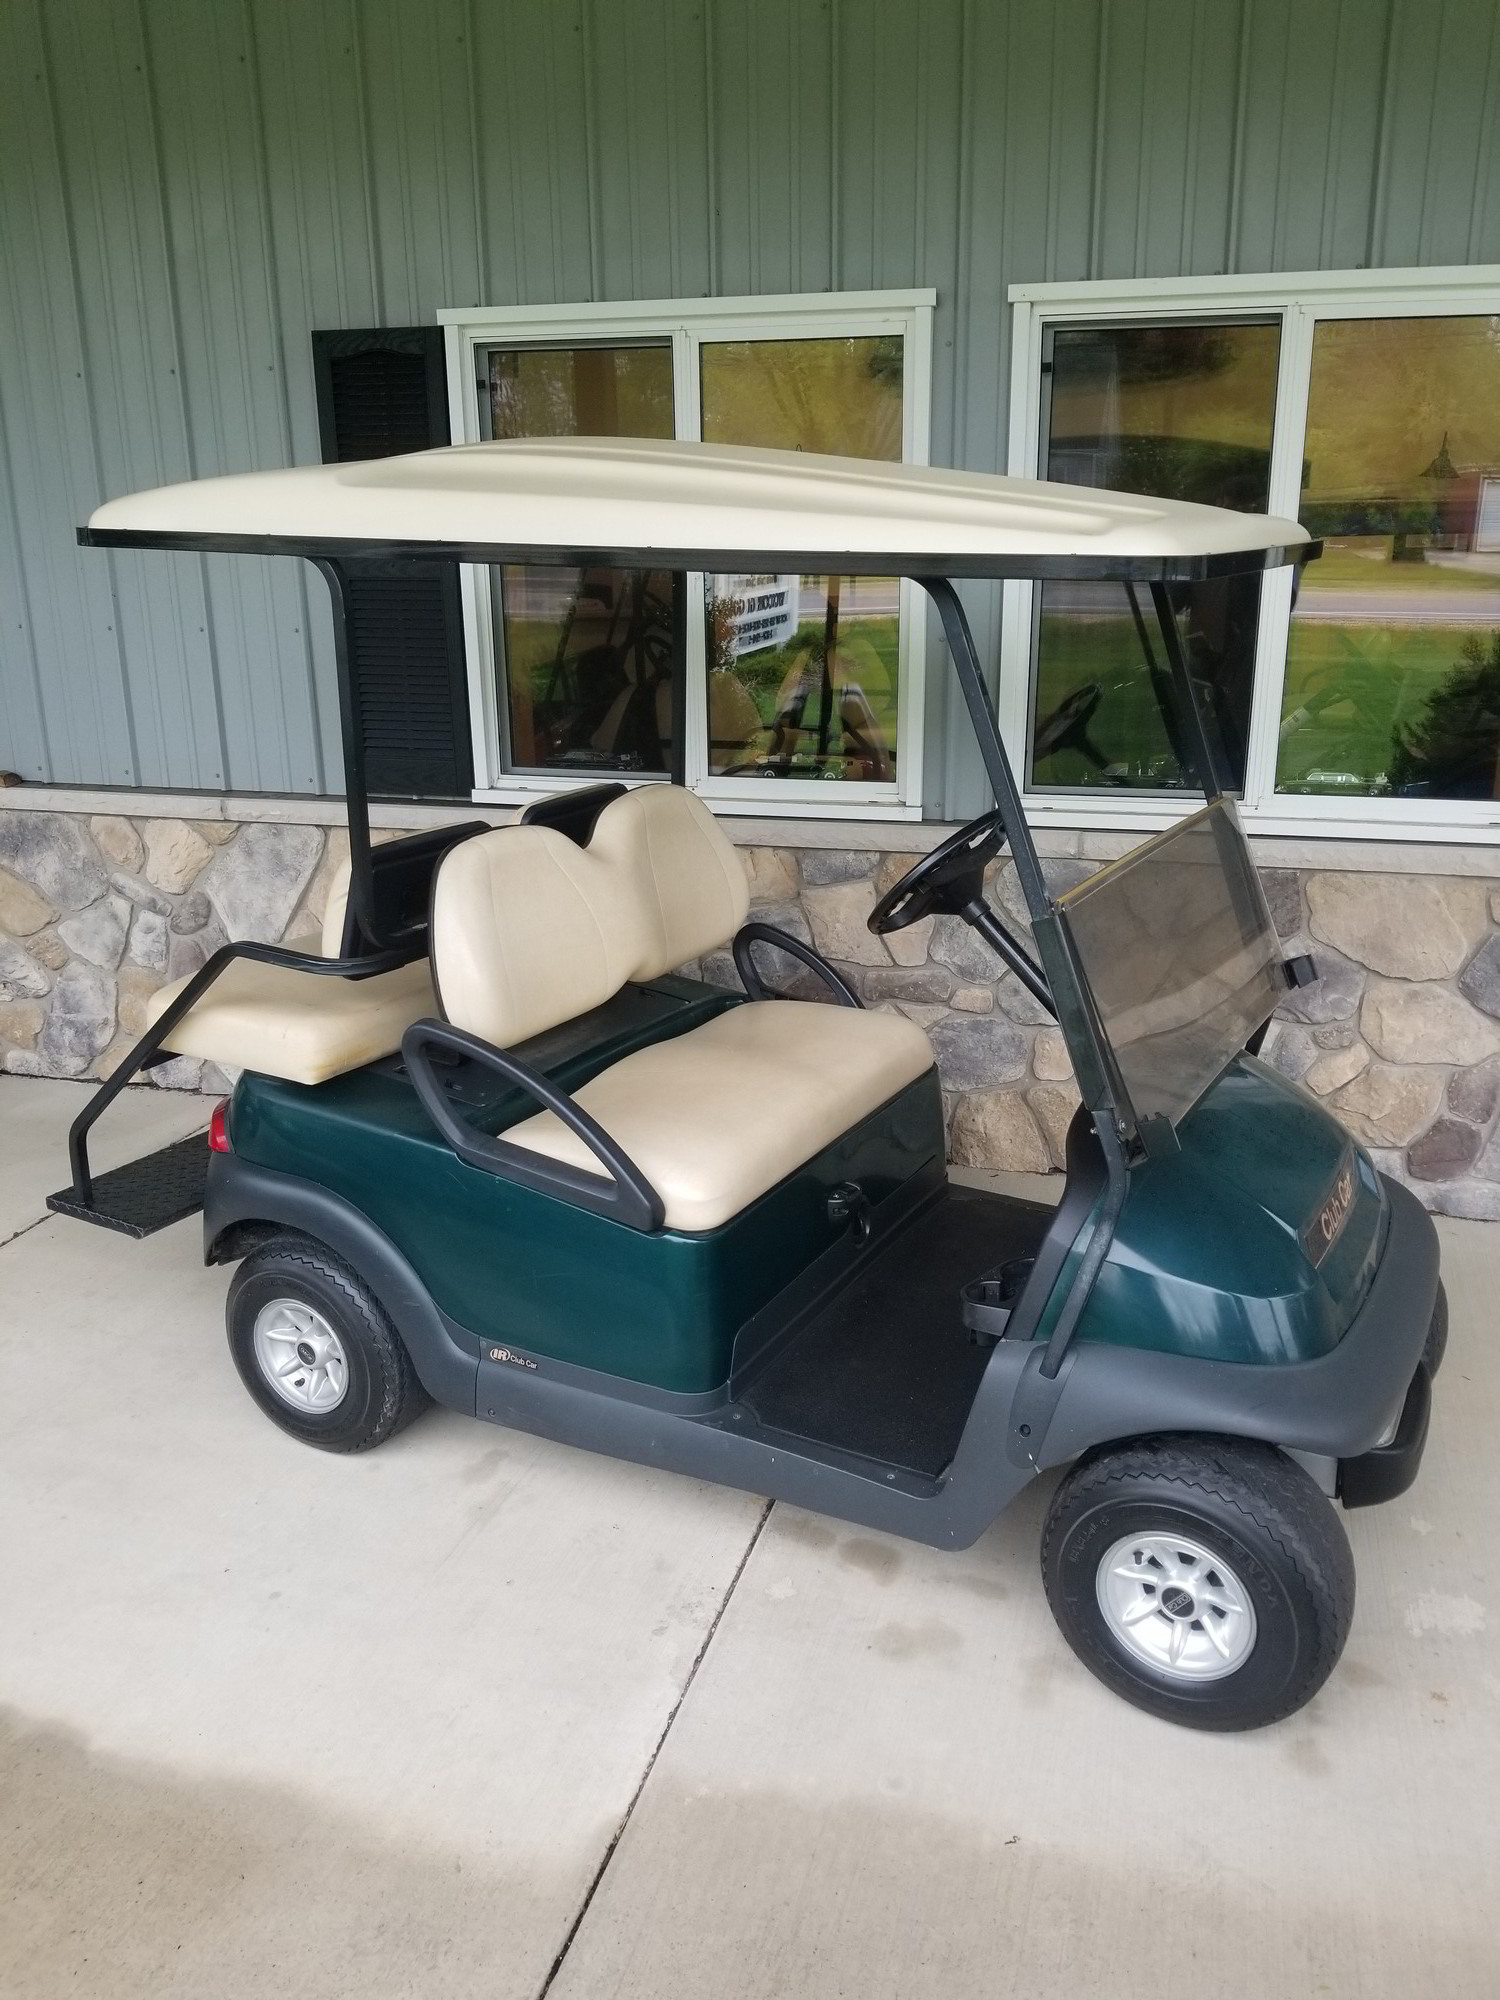 4 Passenger Green Precedent Golf Cart for Sale in Wisconsin | Brown's  Service Wisconsin Golf